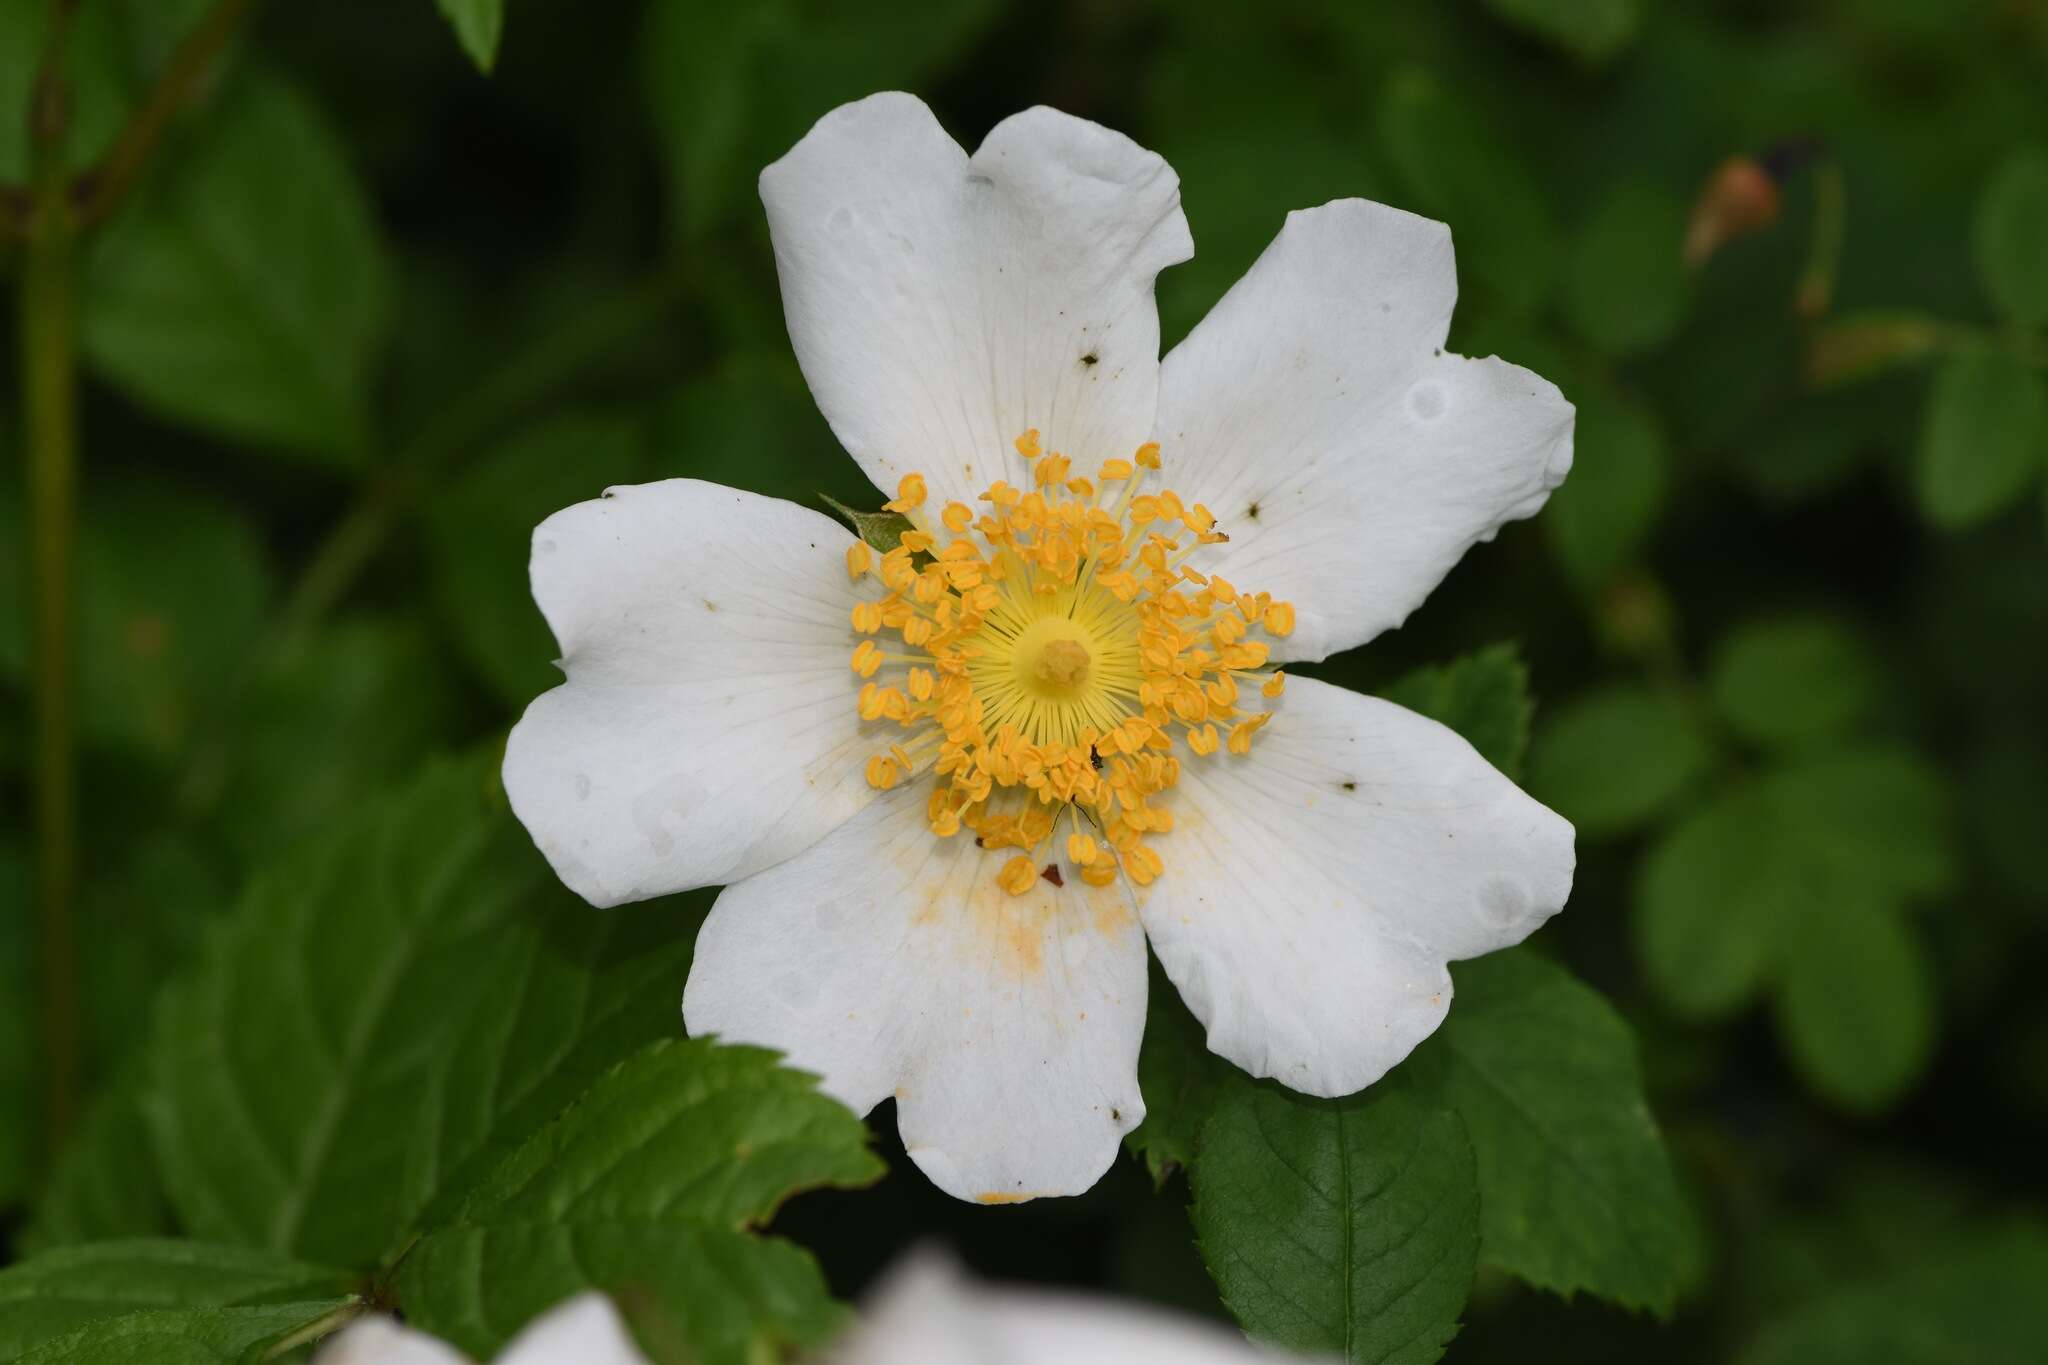 Image of corymb rose